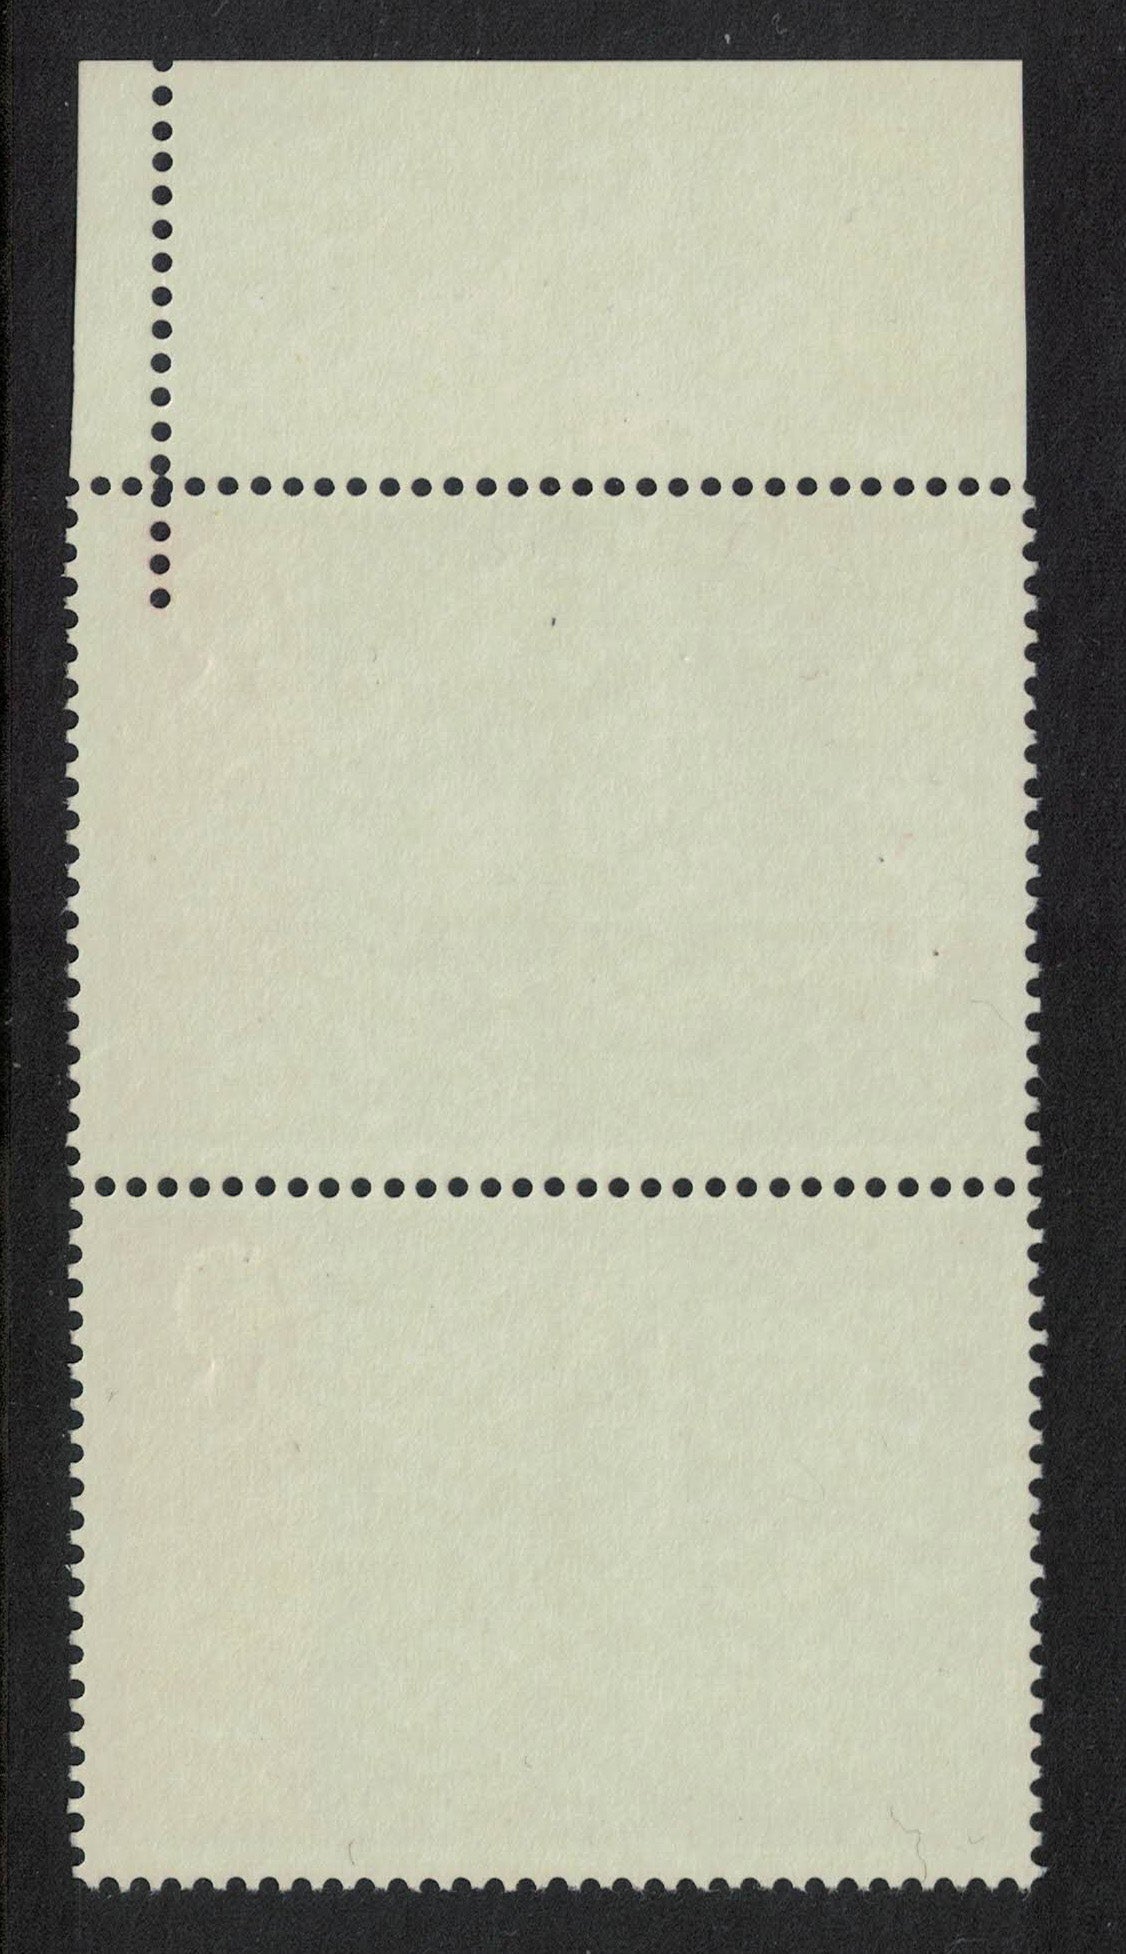 1971 GB SG894 2½d Xmas with misperforation error from top U/M Vert Pair